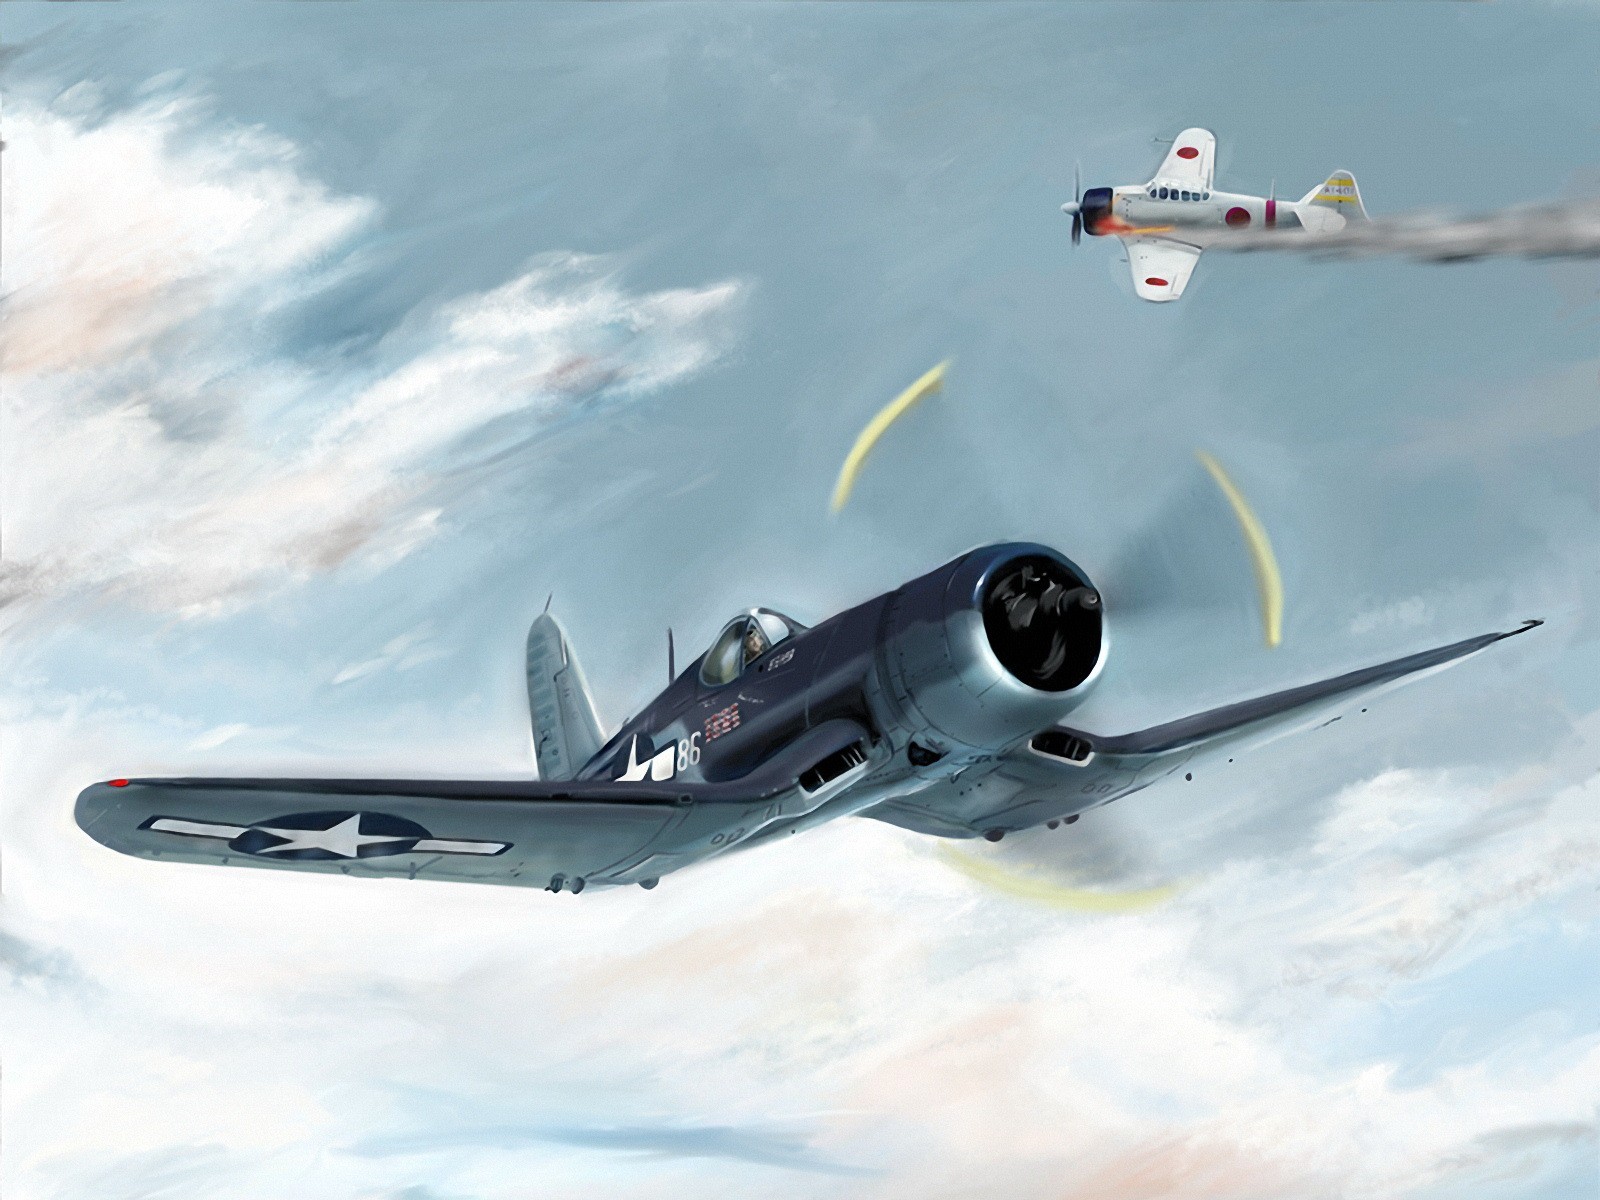 Download wallpaper: Planes, air fight, wallpaper